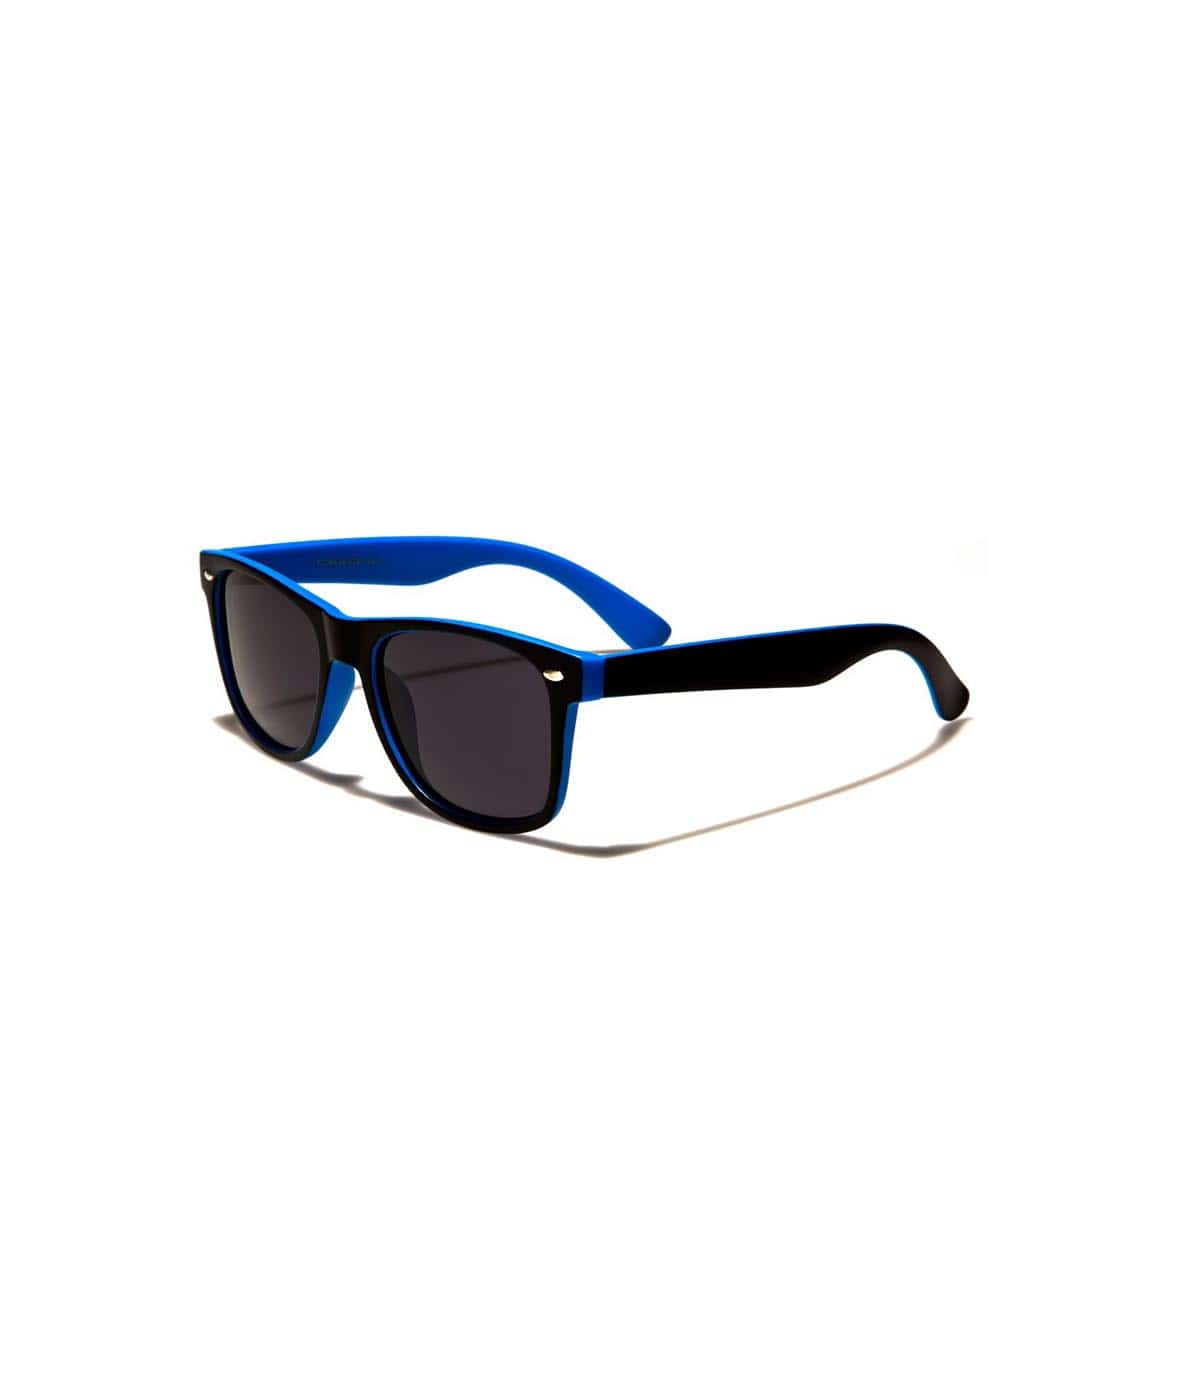 Retro Polarized Two-Tone Sunglasses, Lifetime Guarantee